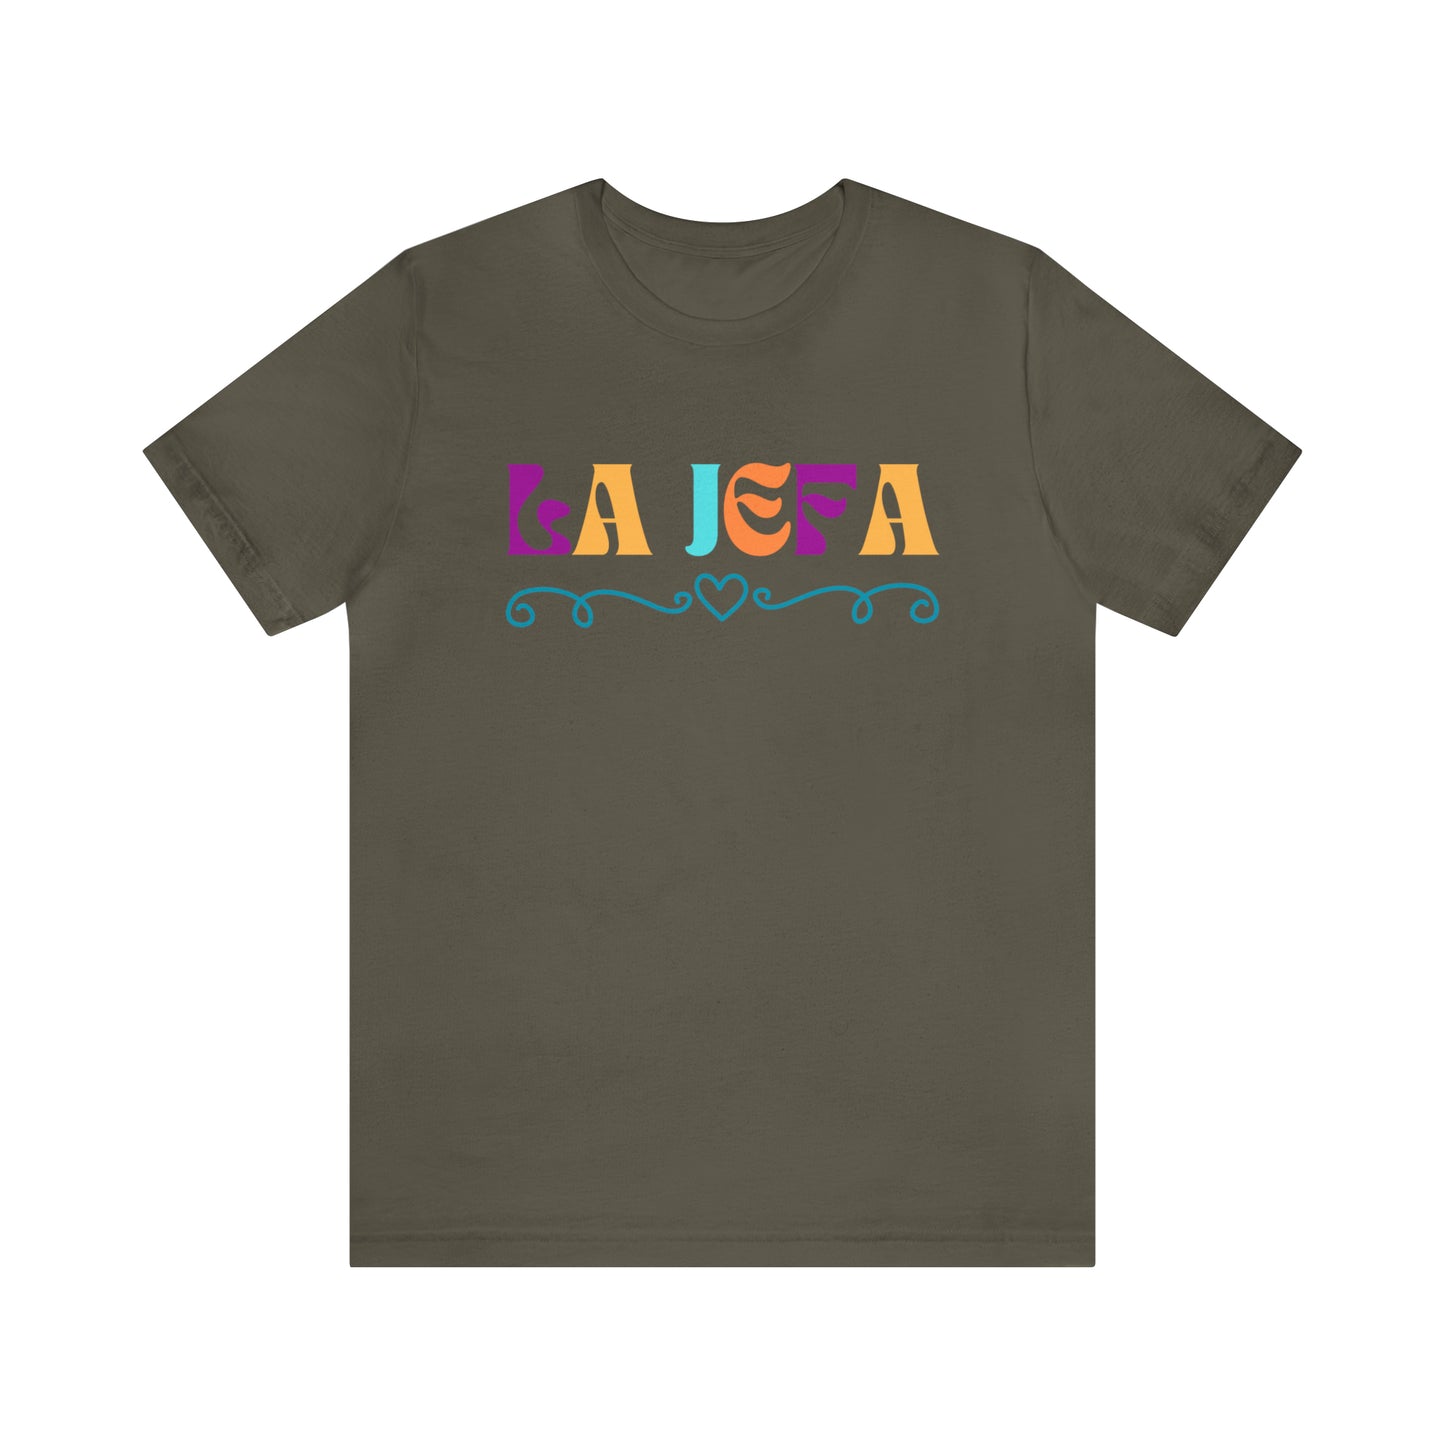 La Jefa, Shirt